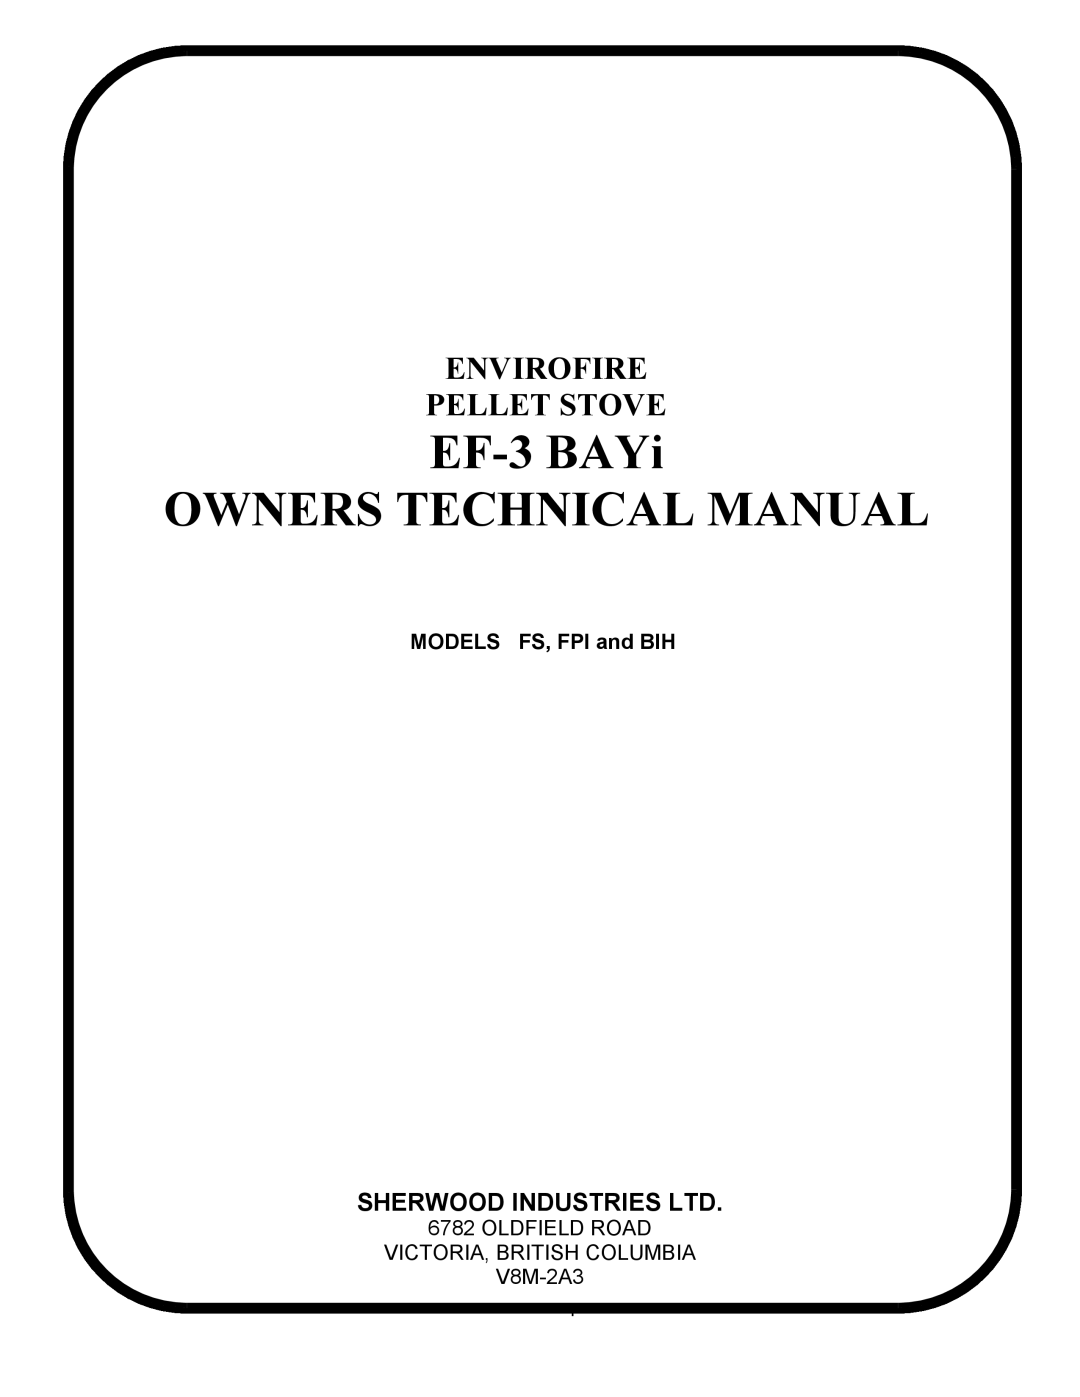 Sherwood EF-3 BAYI technical manual MODELS FS, FPI and BIH, EF-3BAYi OWNERS TECHNICAL MANUAL, Envirofire Pellet Stove 